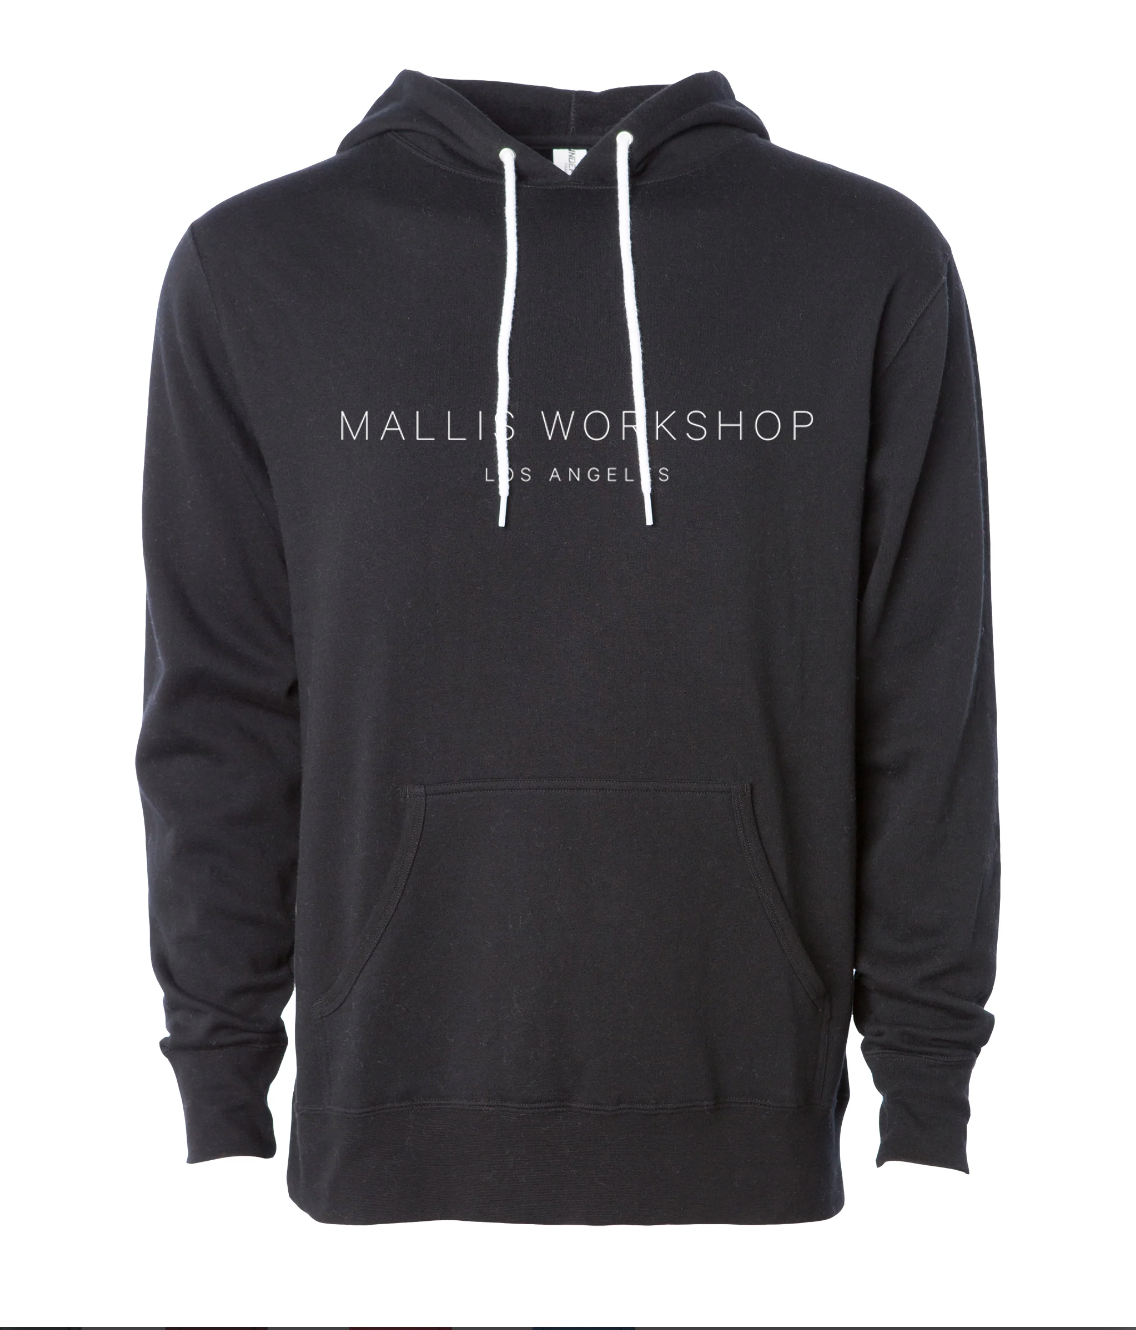 Mallis Workshop Black Hoodie - Full Logo Chest